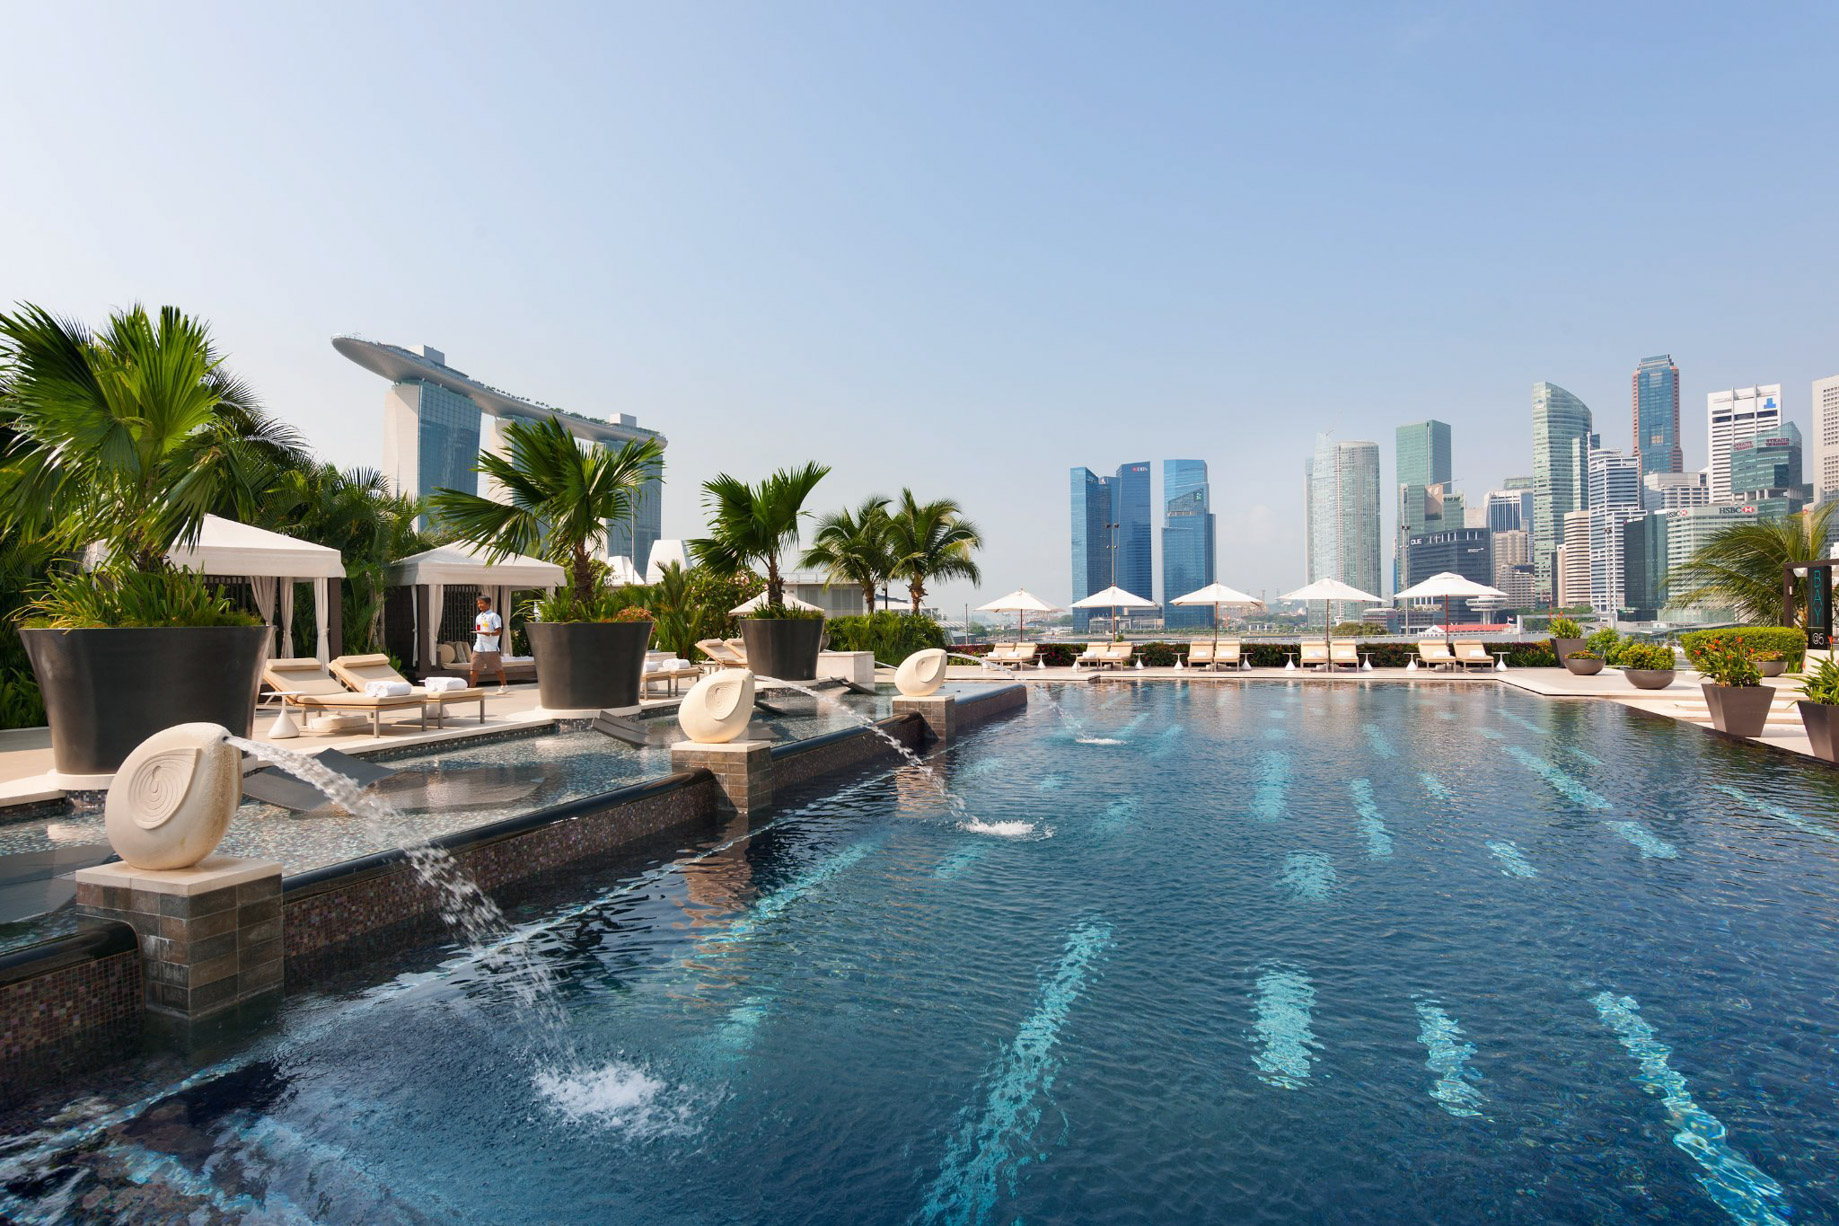 Mandarin Oriental, Singapore Hotel – Singapore – Exterior Pool